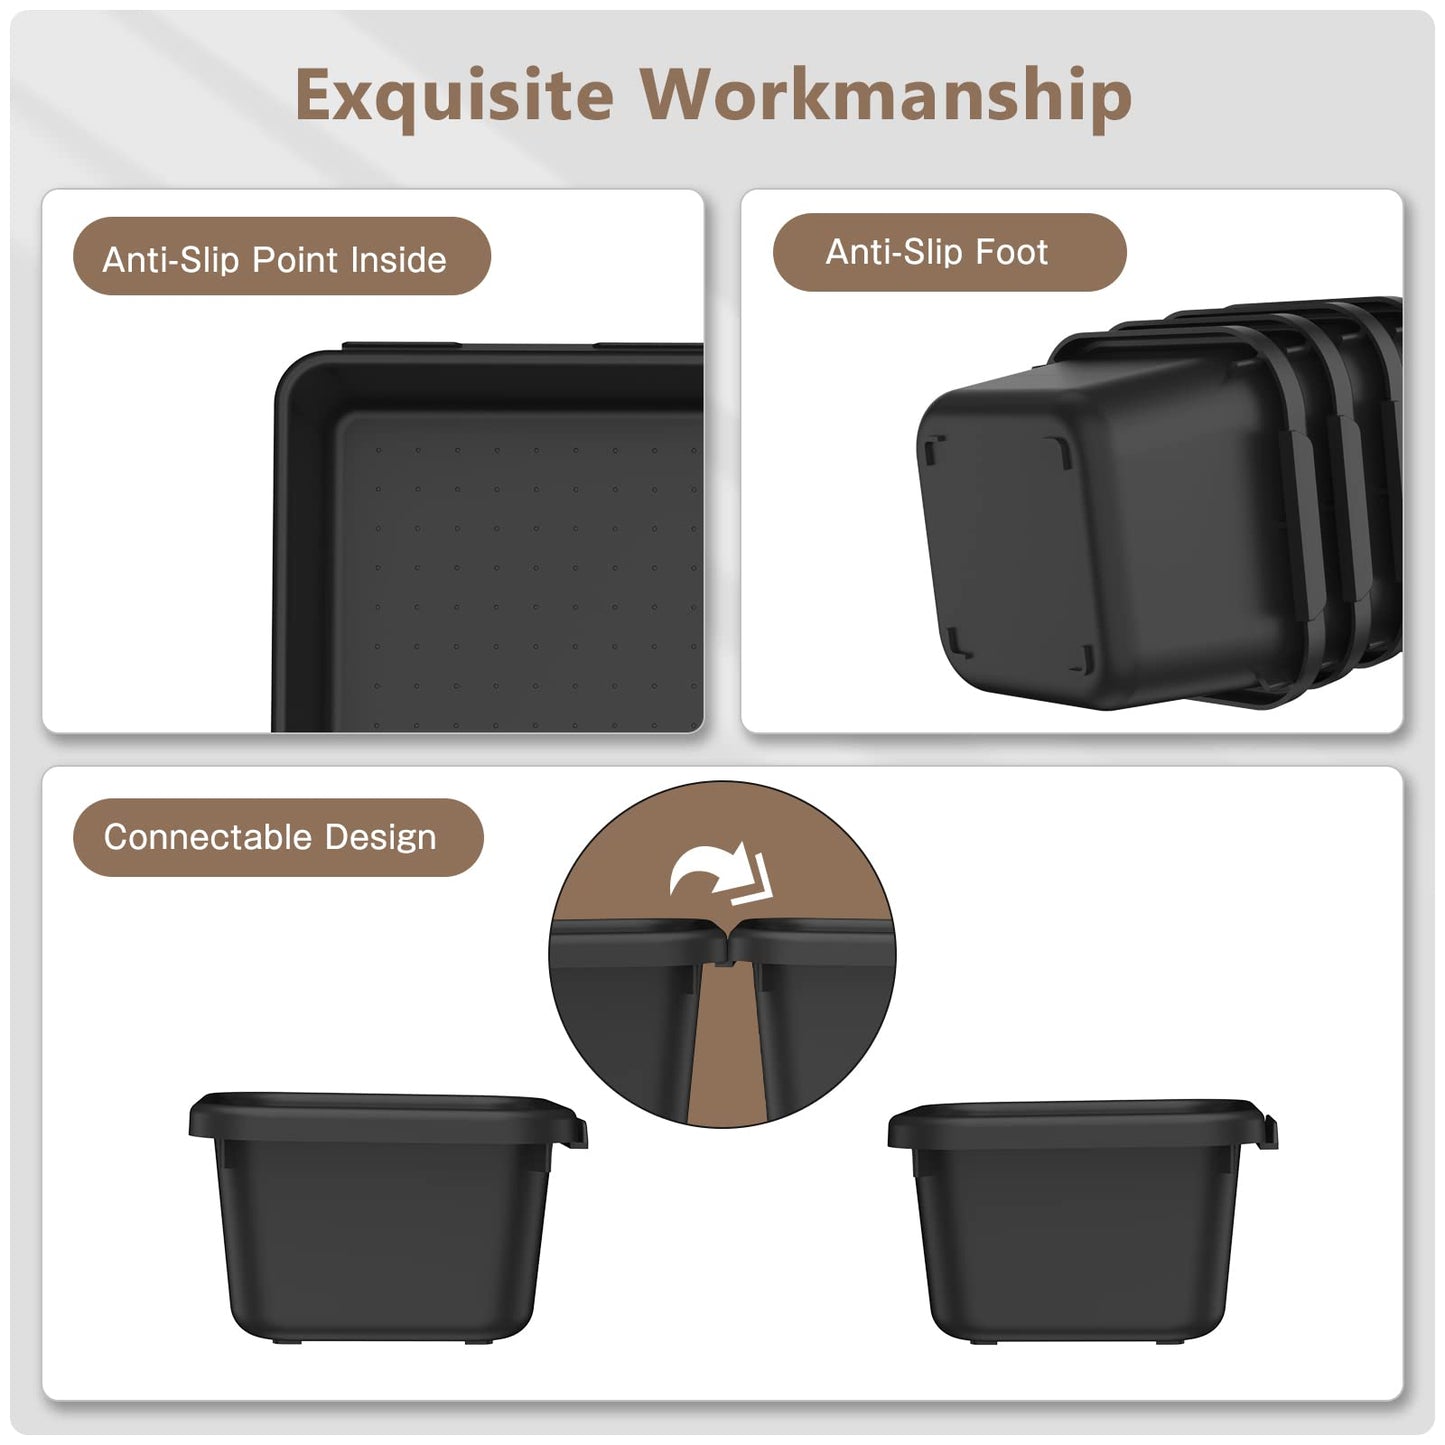 A-LuGei【𝟰𝟲𝗣𝗖𝗦【5 Size】 Tool Box Organizer Tray Divider Set, 【Black】 Desk Drawer Organizer, Garage Organization and Storage Toolbox Accessories Rolling